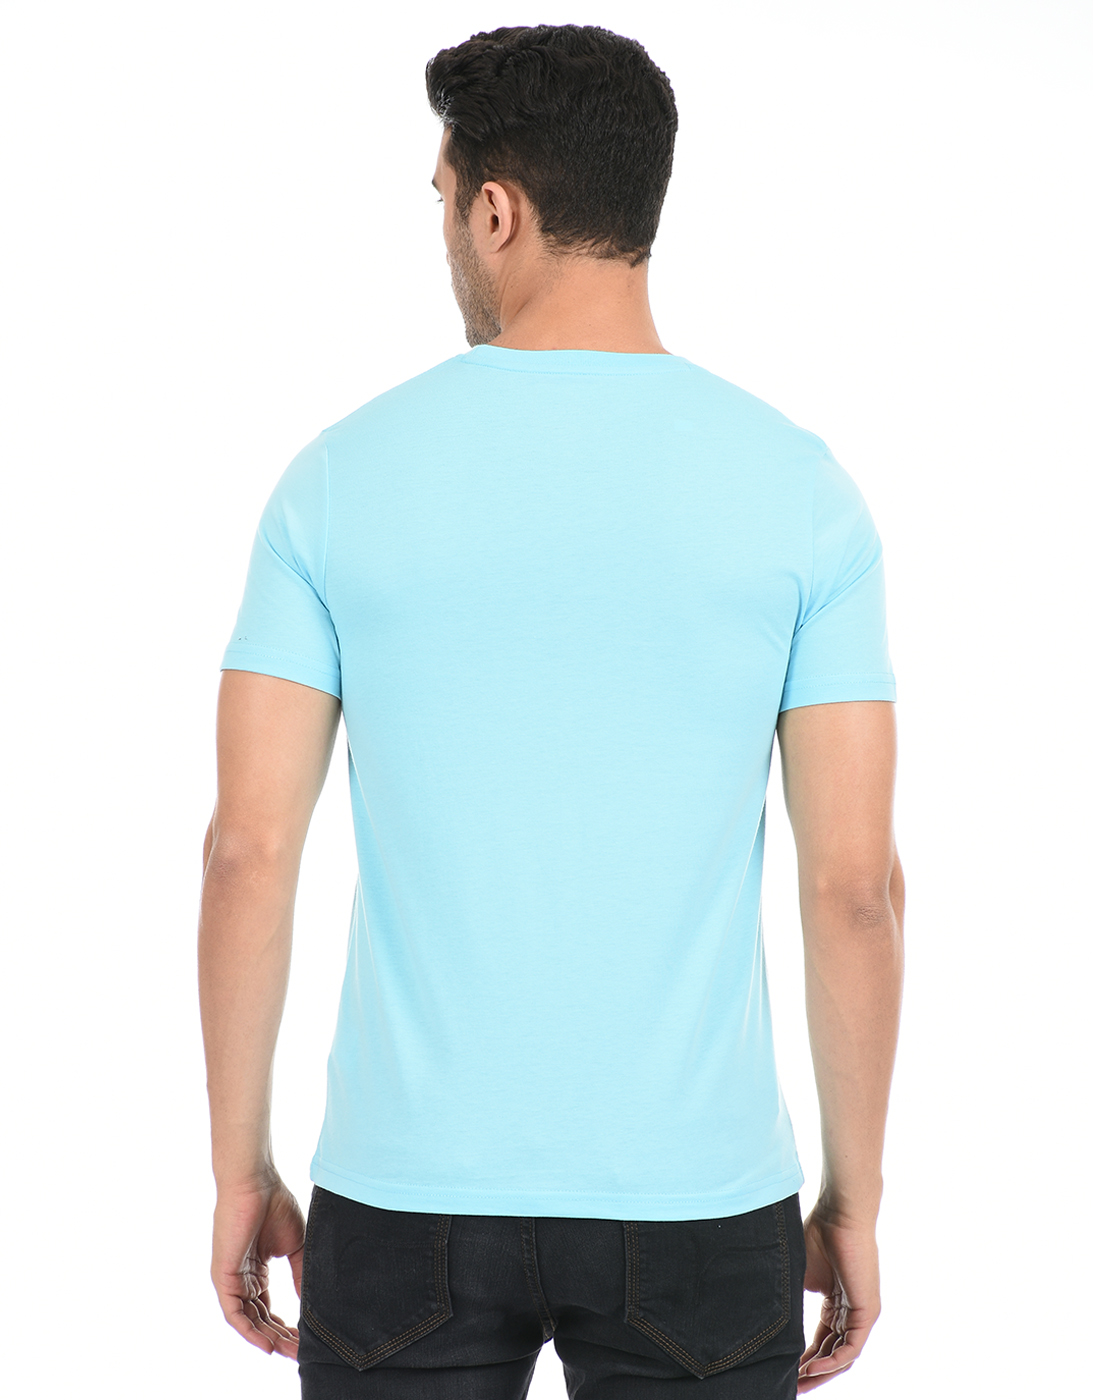 Cloak & Decker by Monte Carlo Men Solid Blue T-Shirt